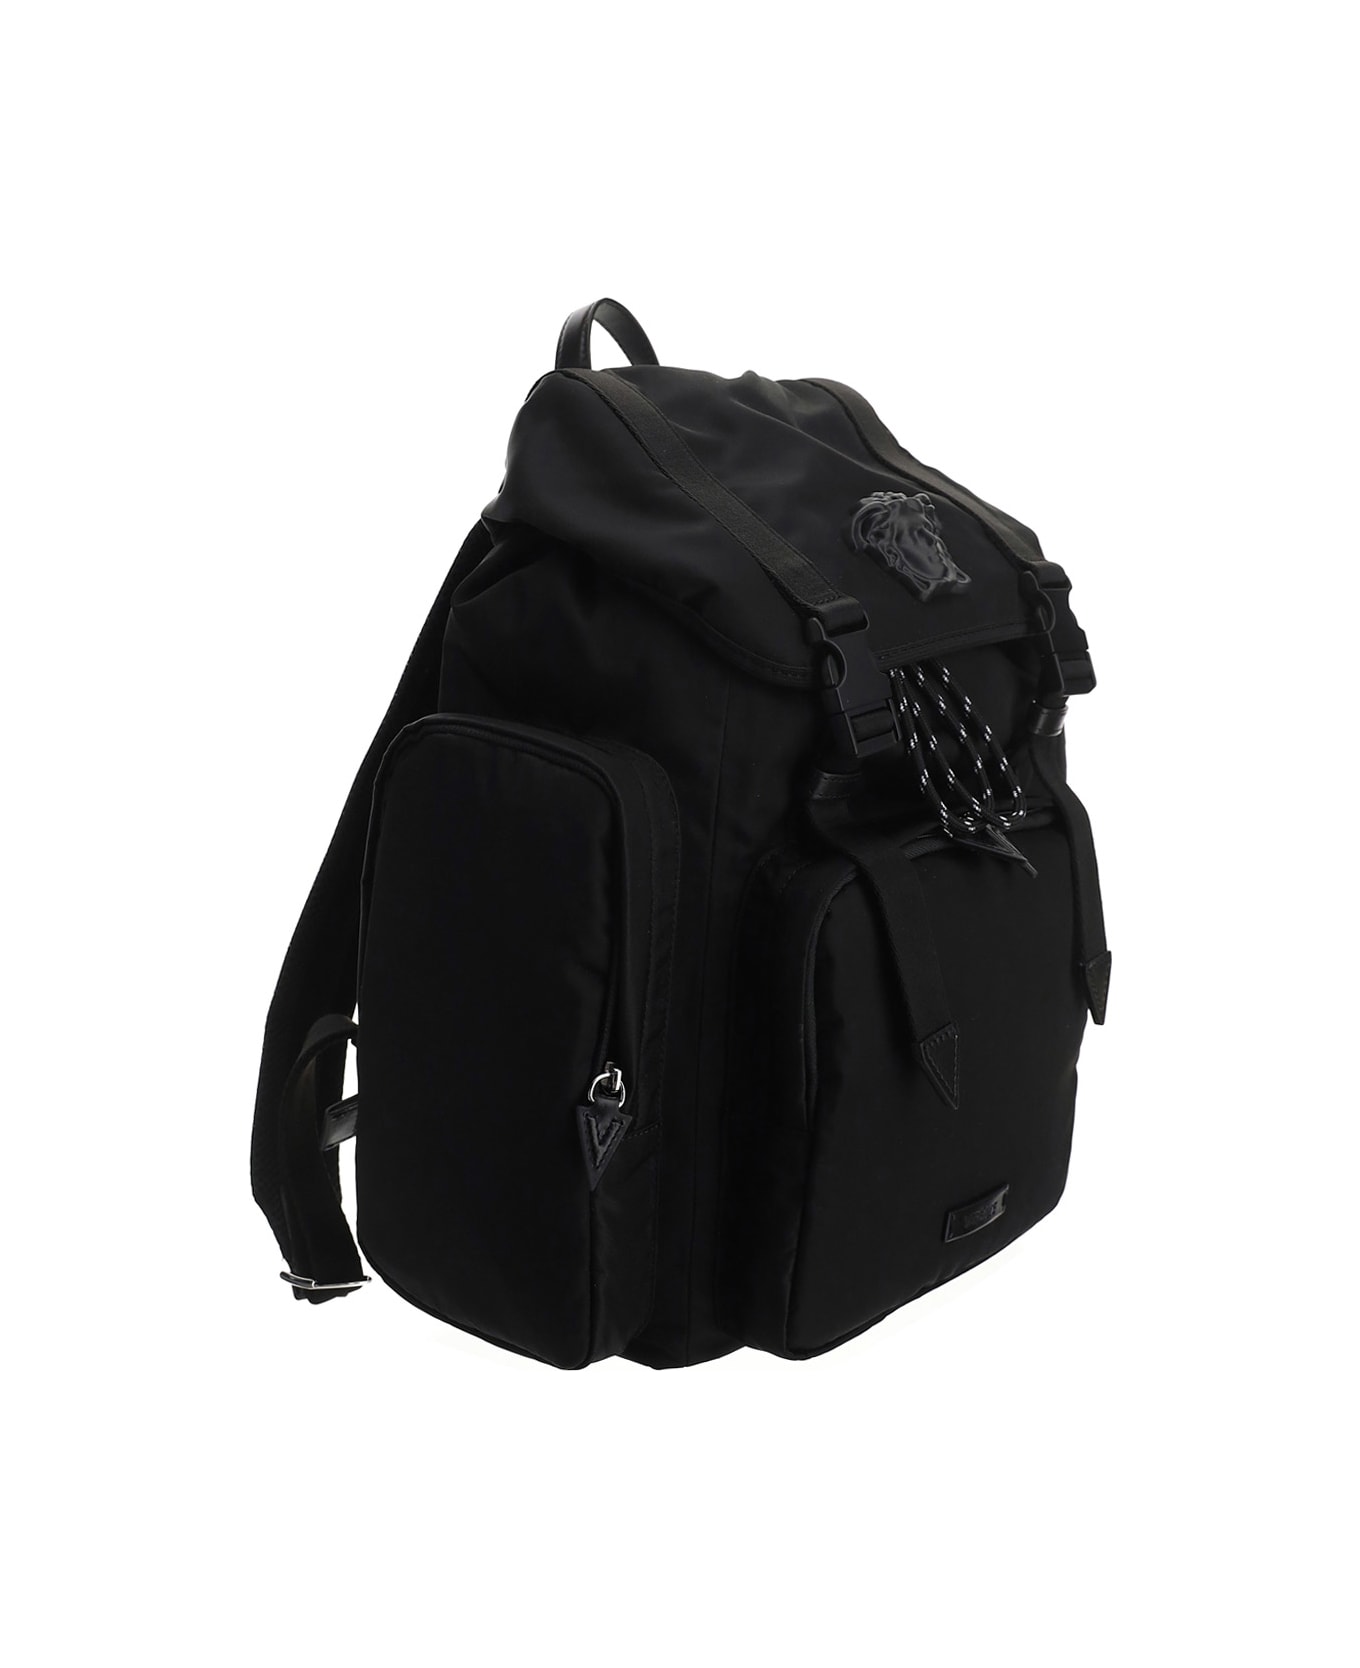 Versace Backpack - Nero/palladio